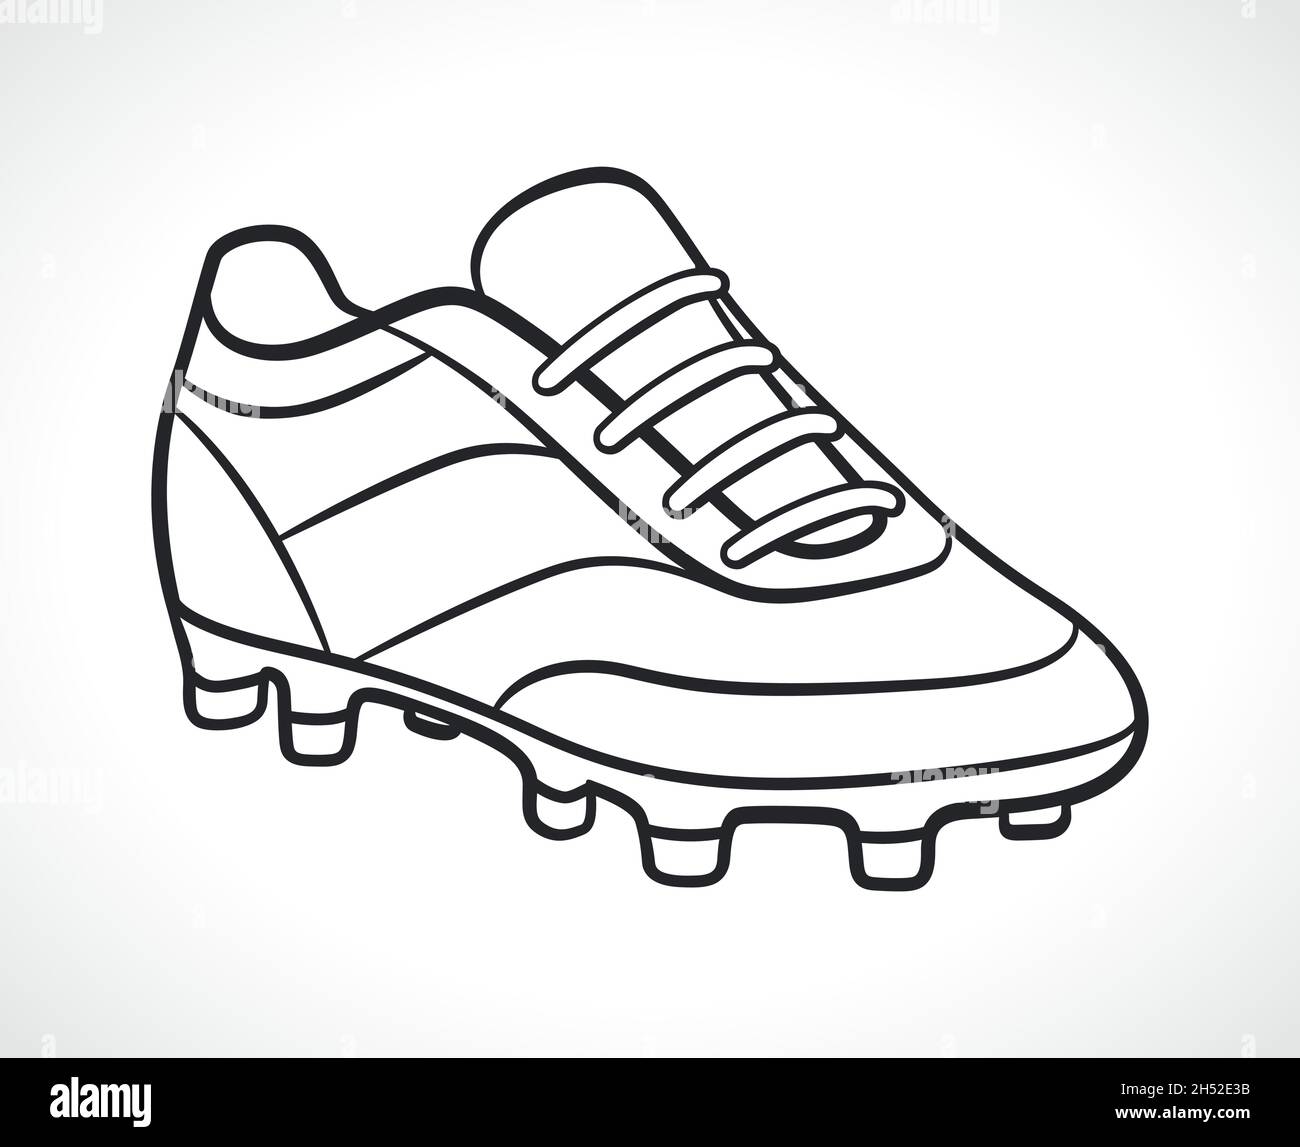 Vector Sketch Illustration Football Boots Stock Illustration  Download  Image Now  Soccer Shoe Illustration Soccer  iStock